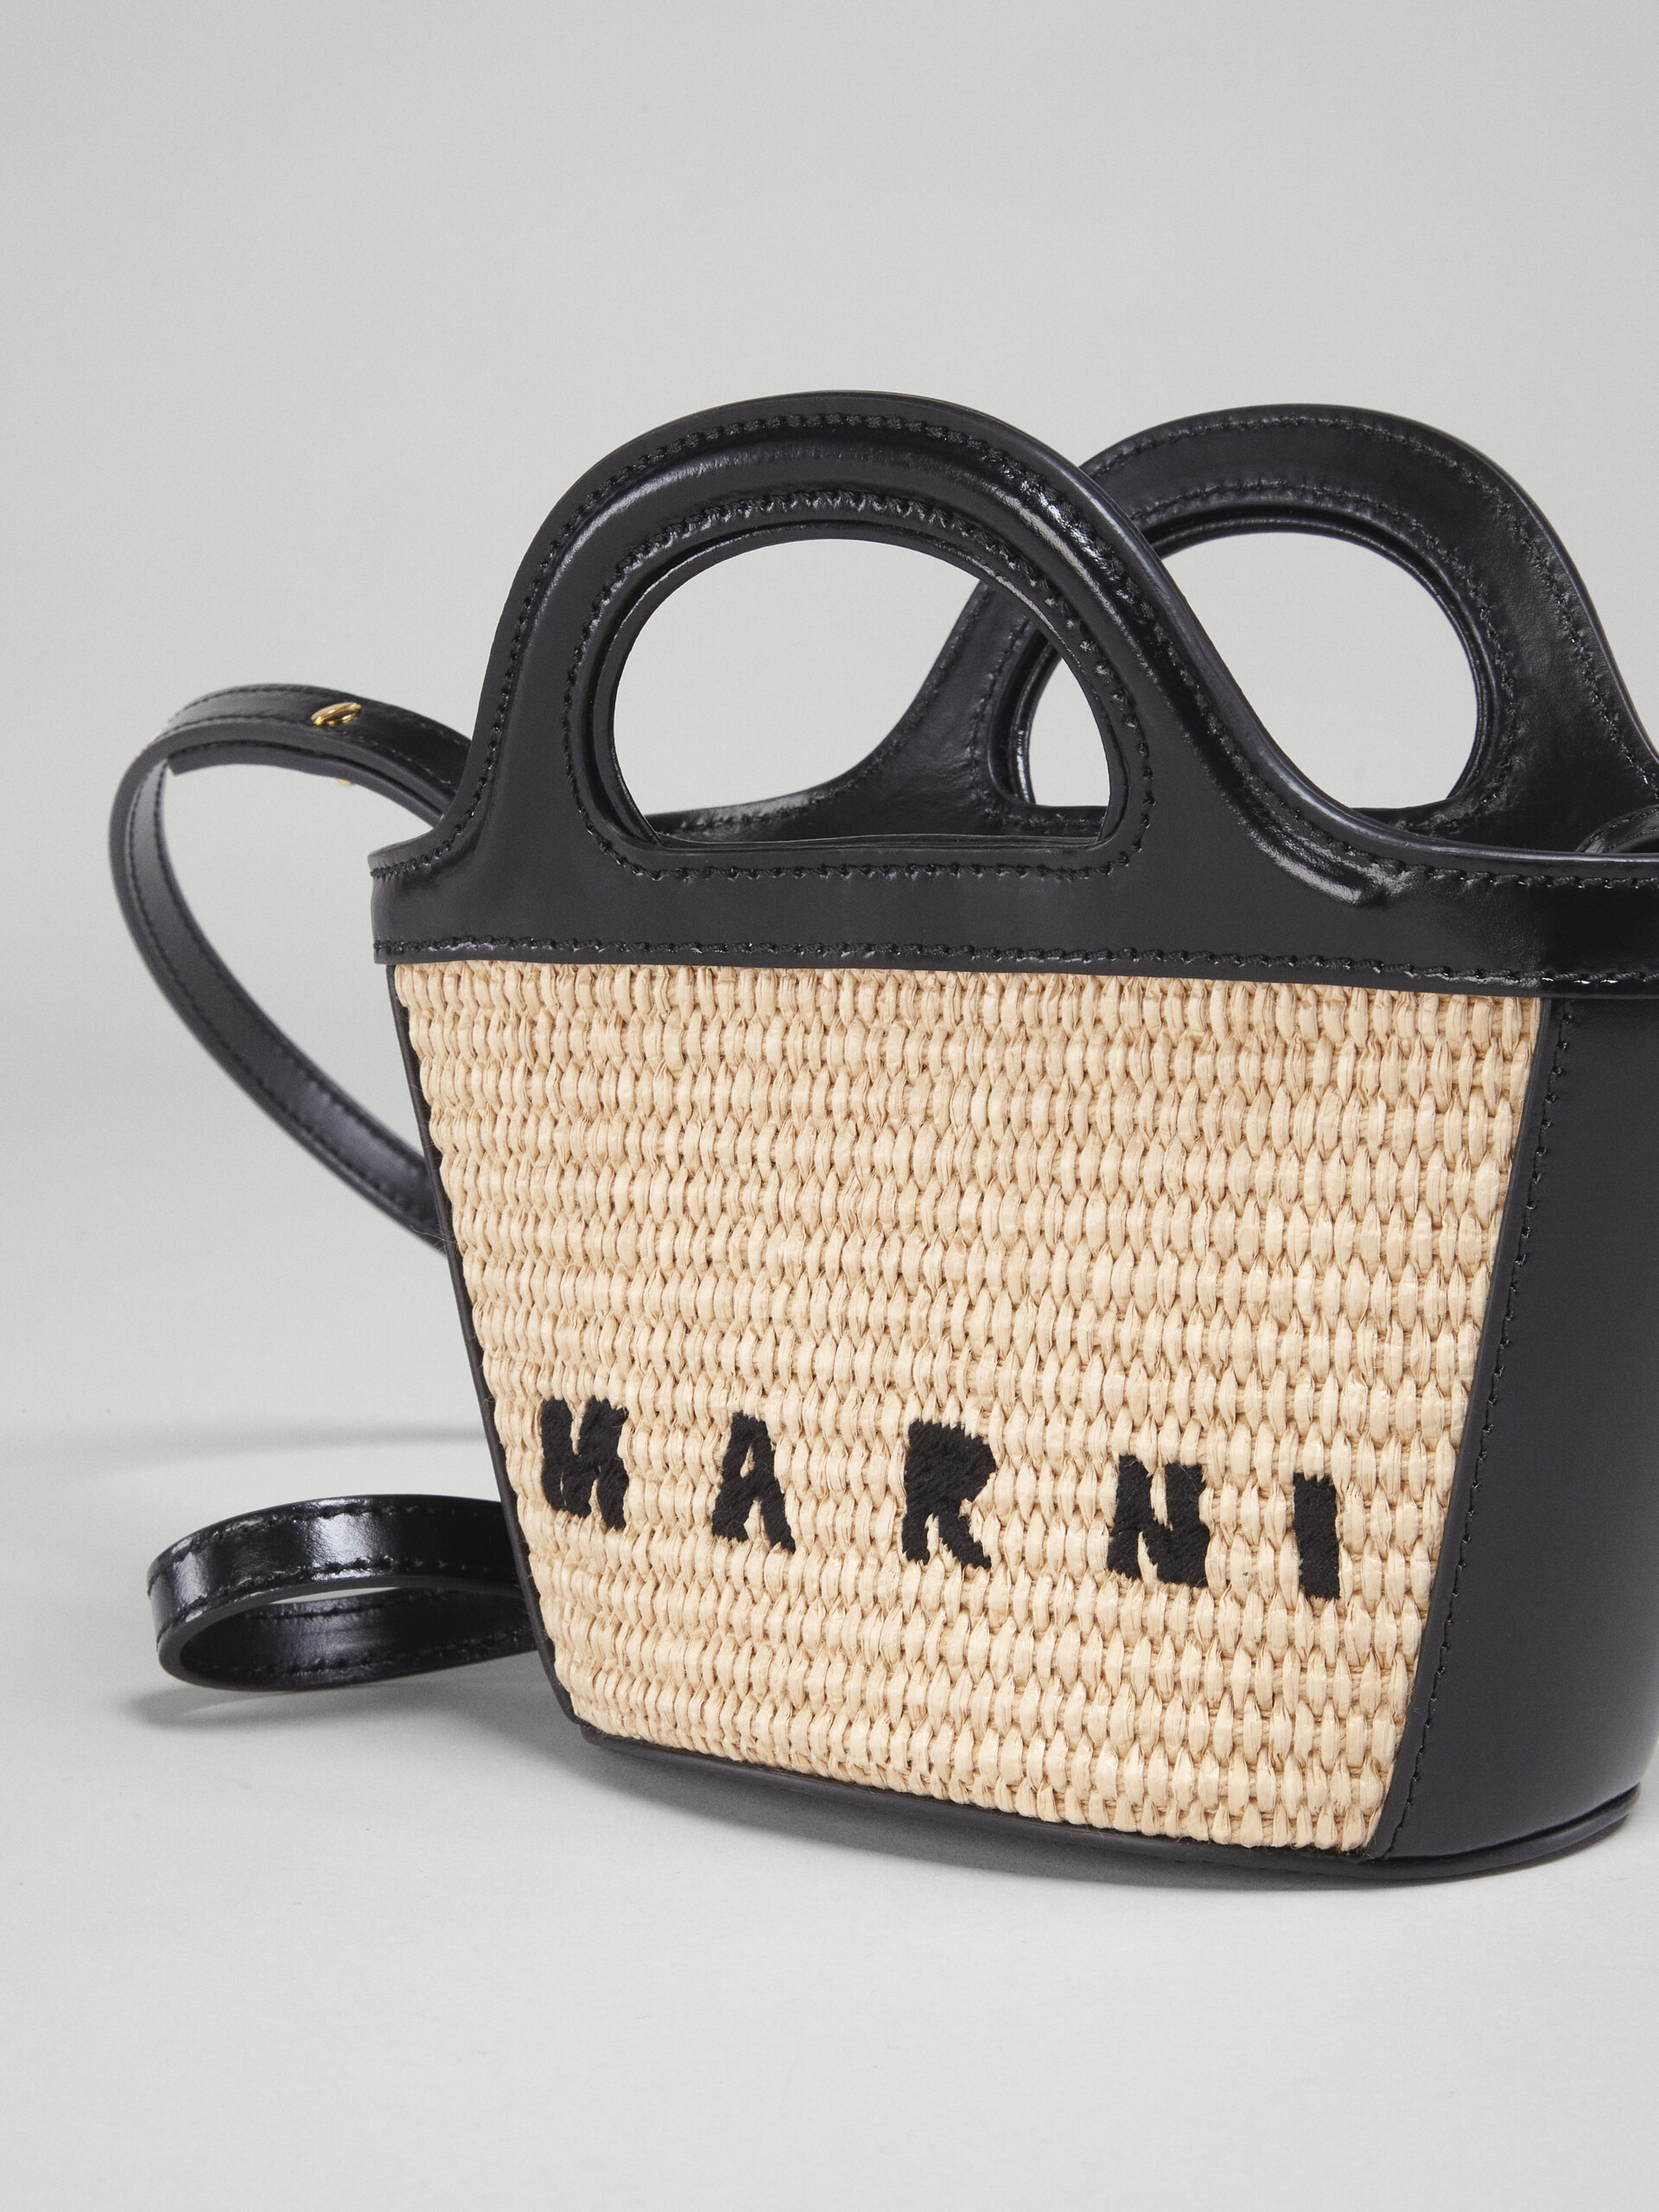 Black leather and raffia micro TROPICALIA SUMMER bag - Handbag - Image 4